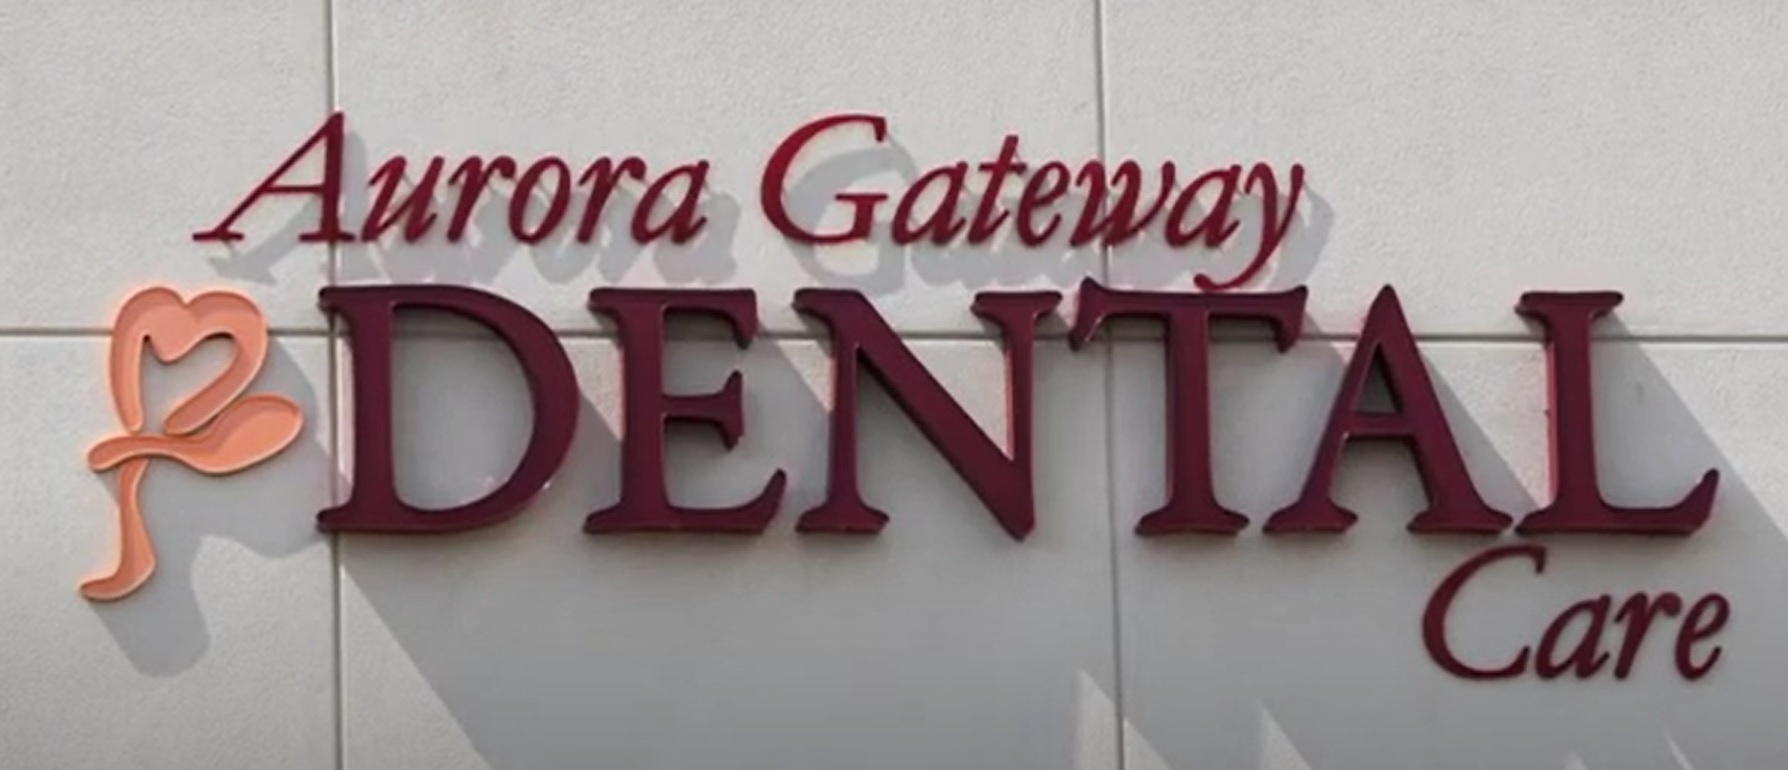 Aurora Gateway Dental Care Logo